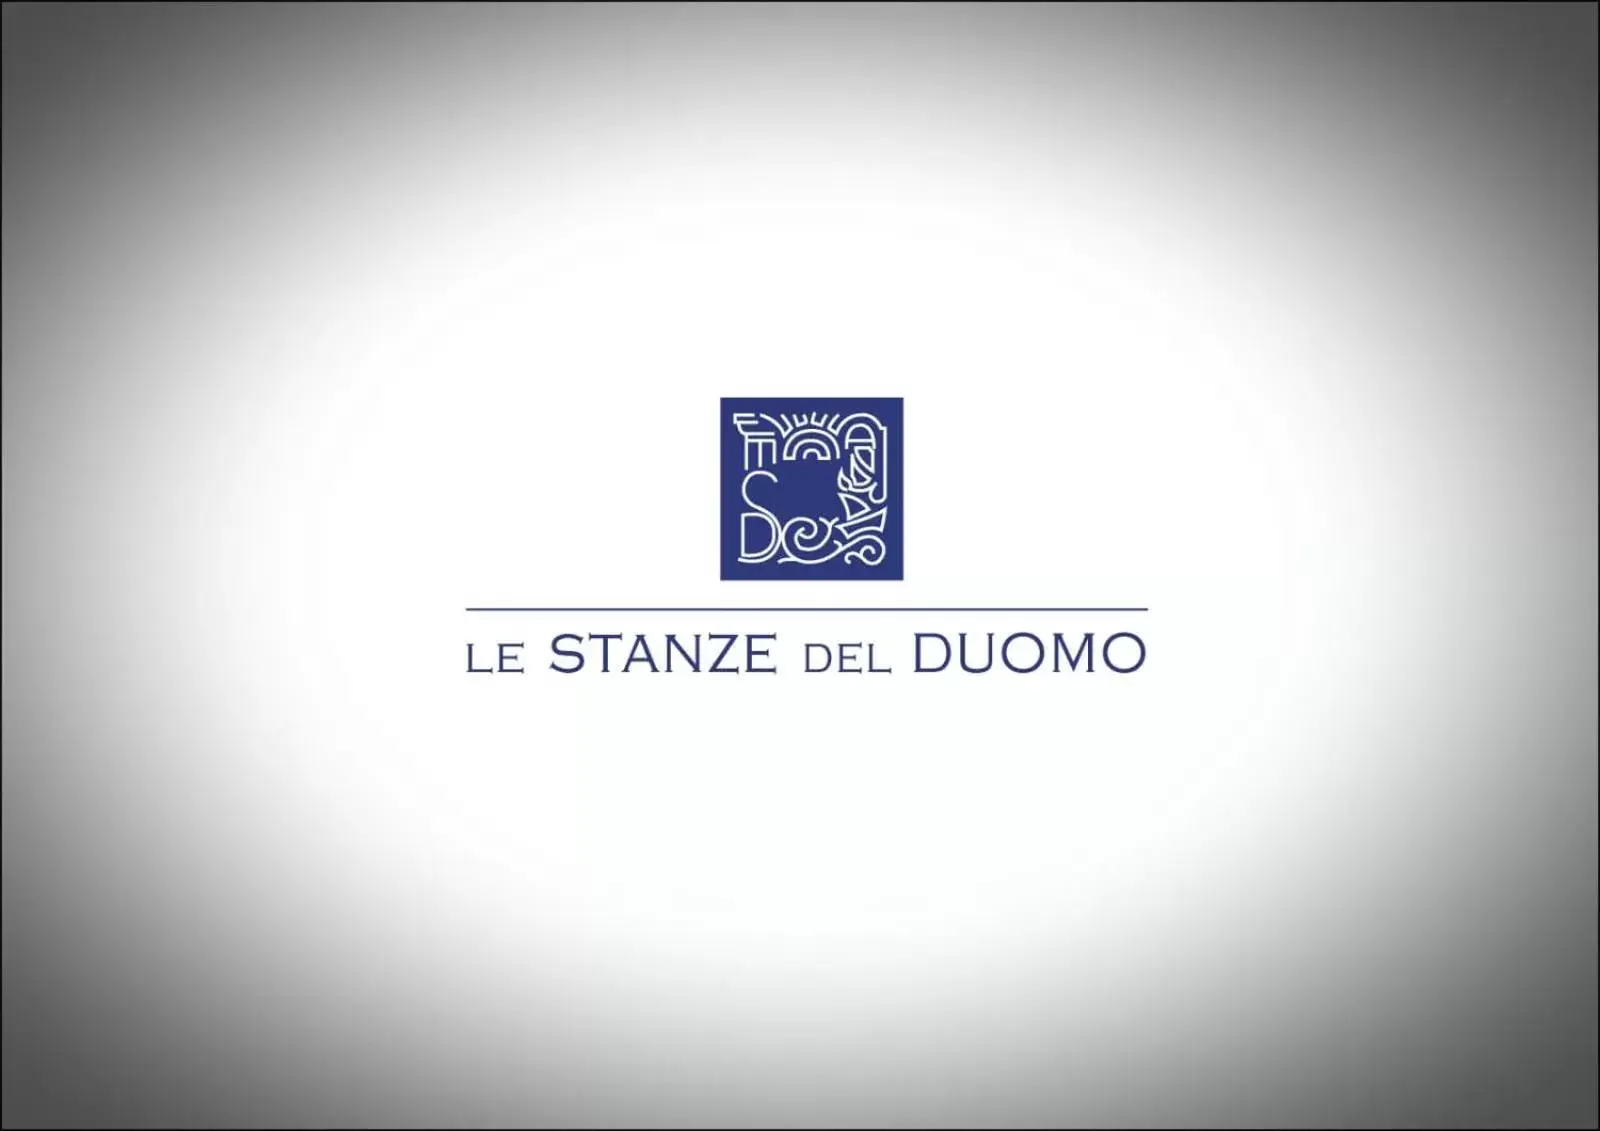 Property logo or sign in Le Stanze Del Duomo